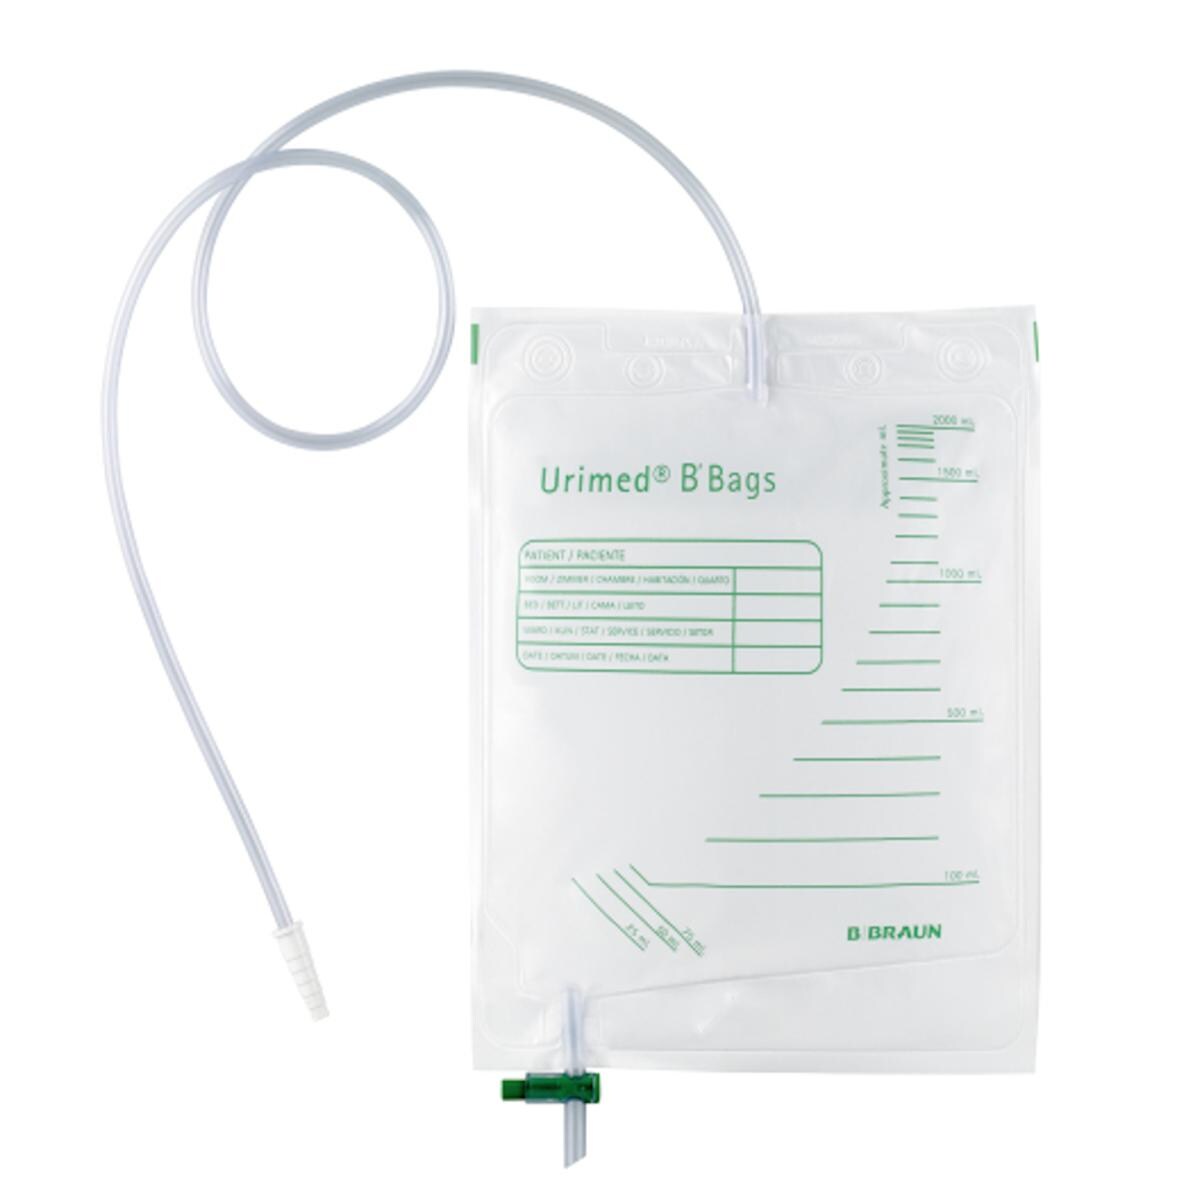 Urimed urineopvang zak met kraan - niet steriel, per 10 stuks